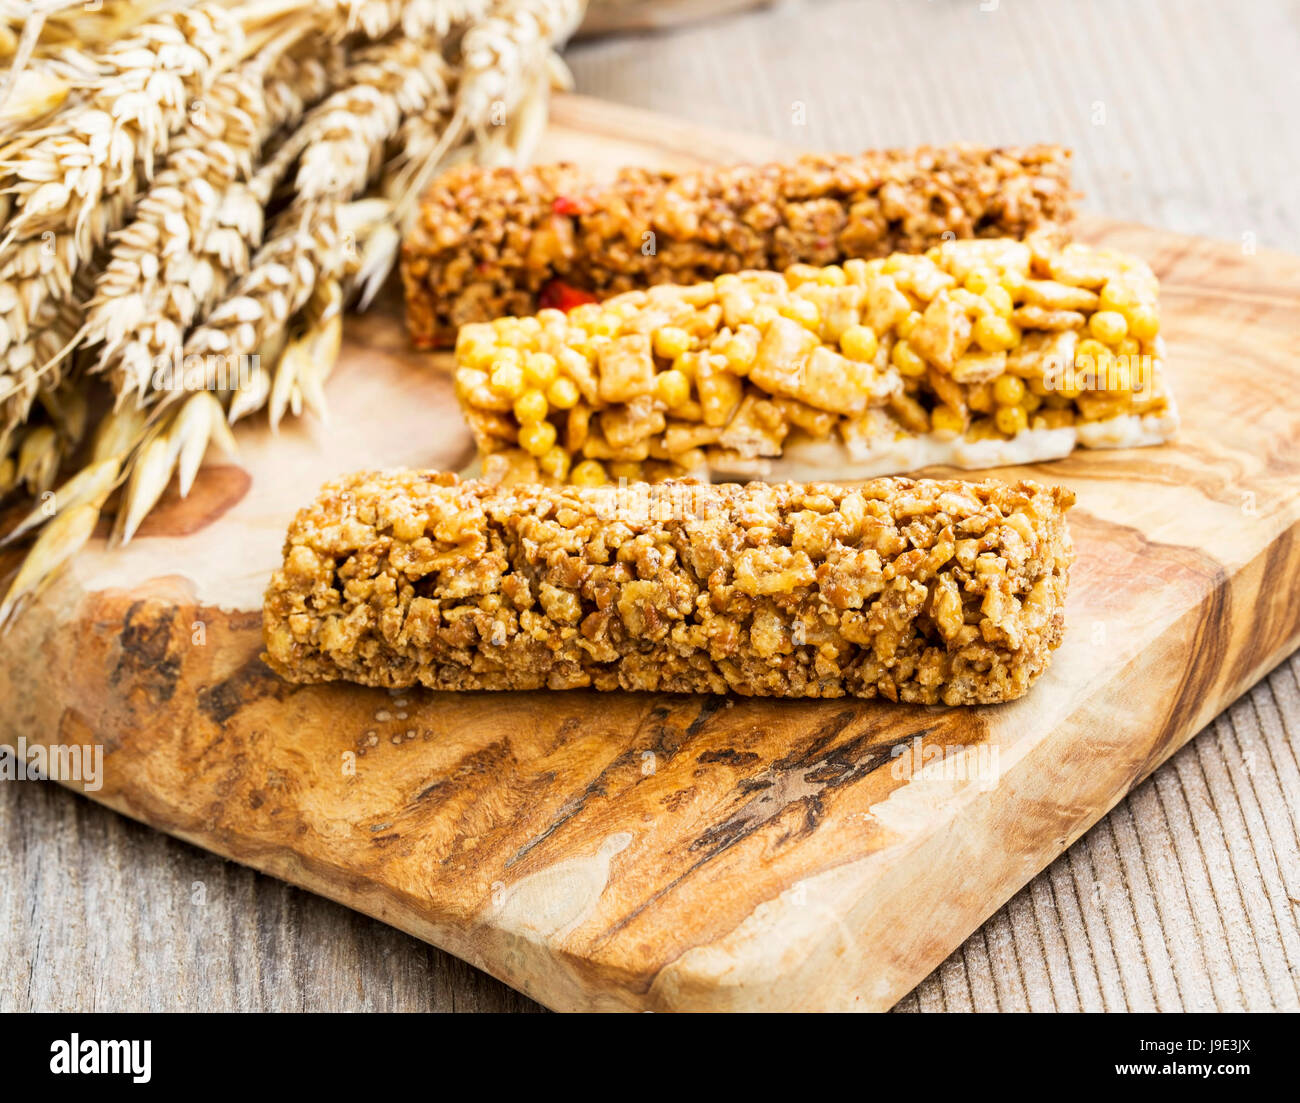 Granola or muesli bars on wooden board , whole wheat protein snacks Stock Photo